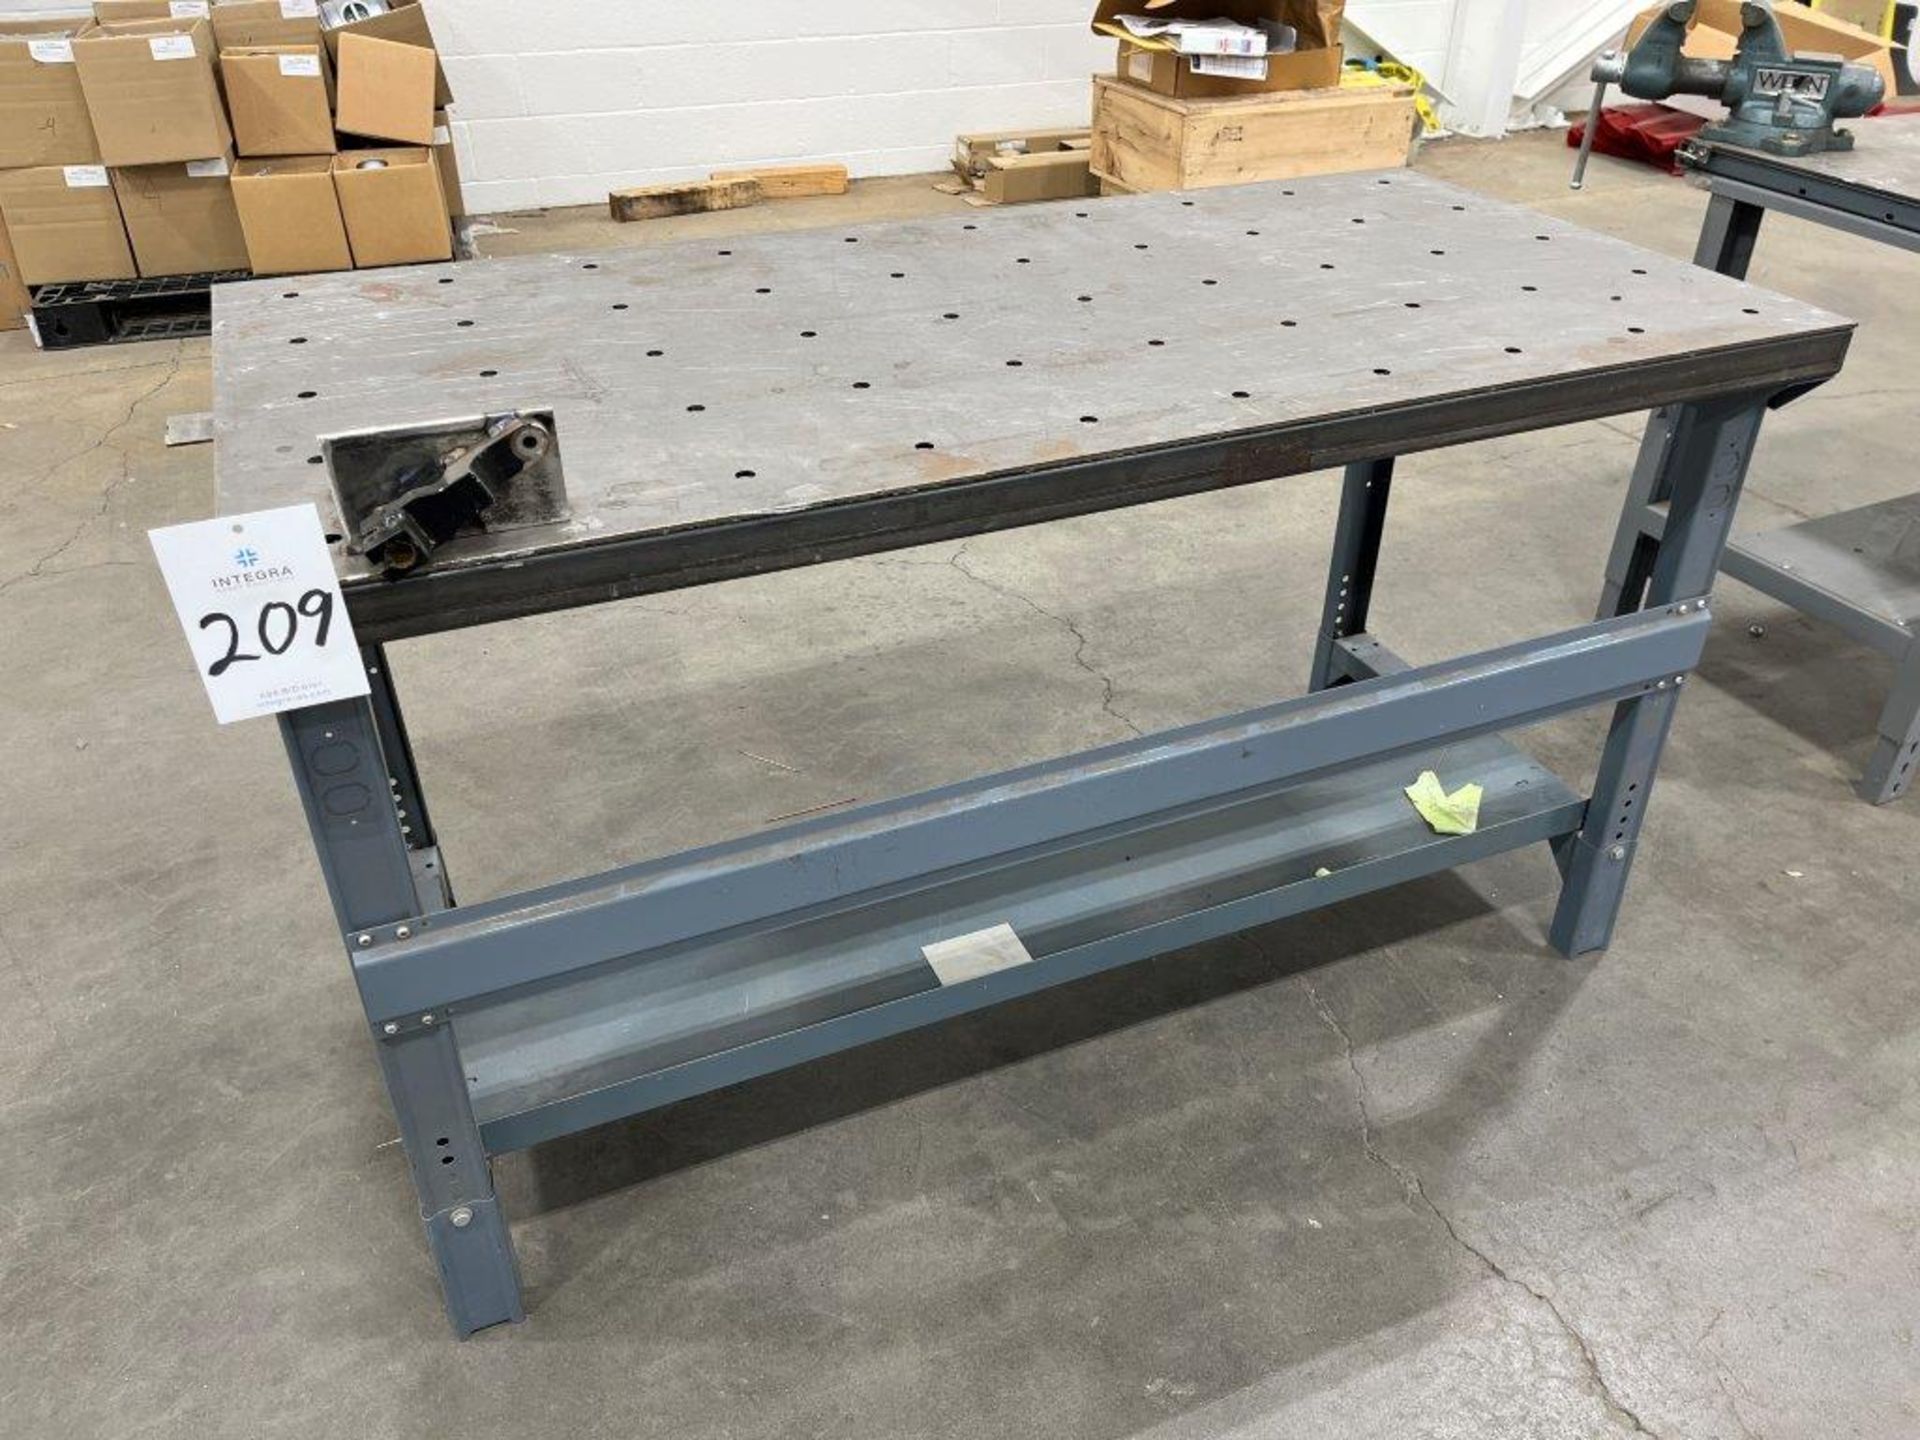 Steel Top Table, 60" x 30" x 1/4"